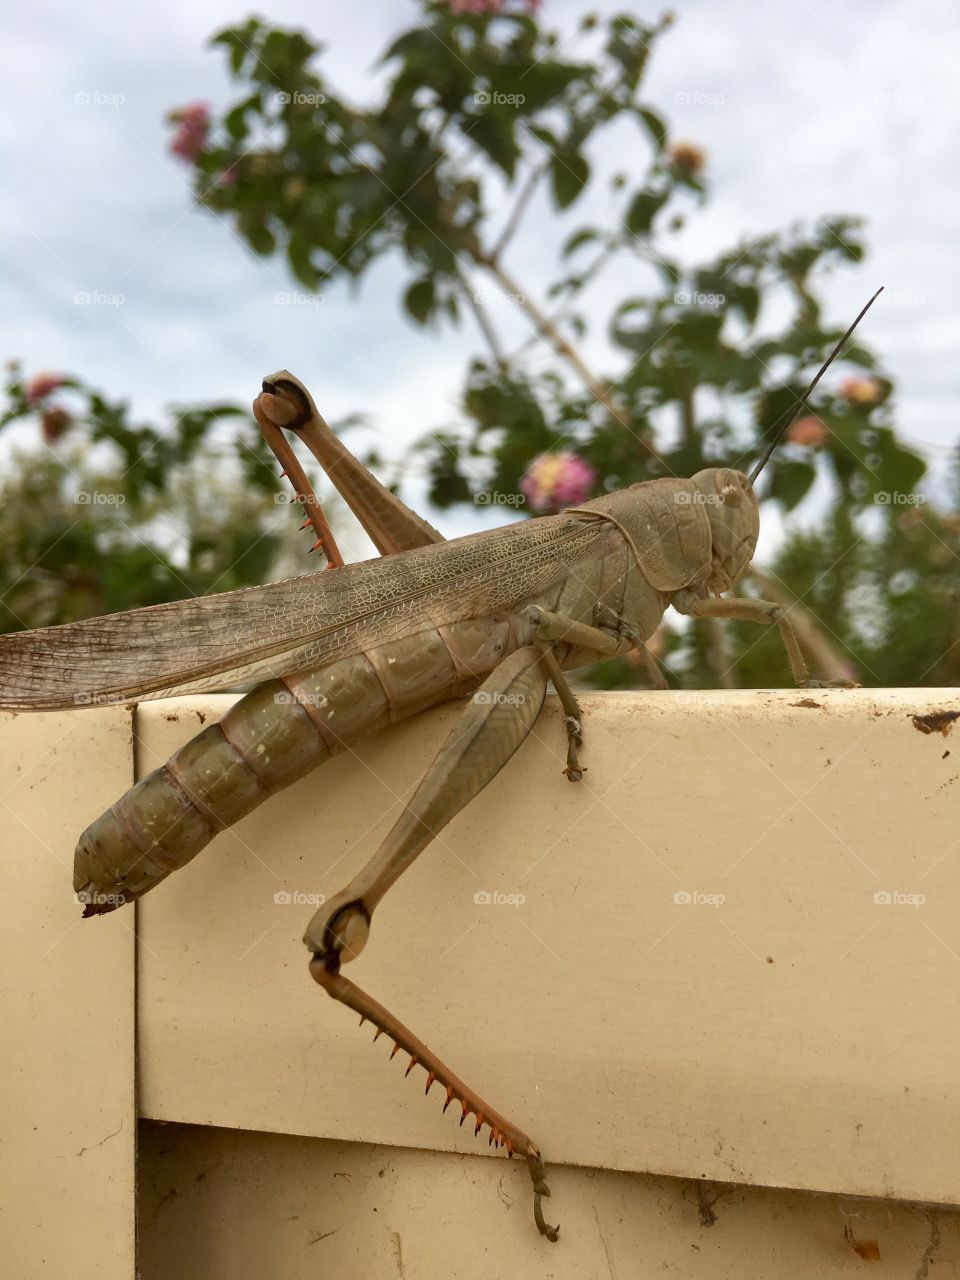 Large locust or grasshopper climbing a backyard fence 